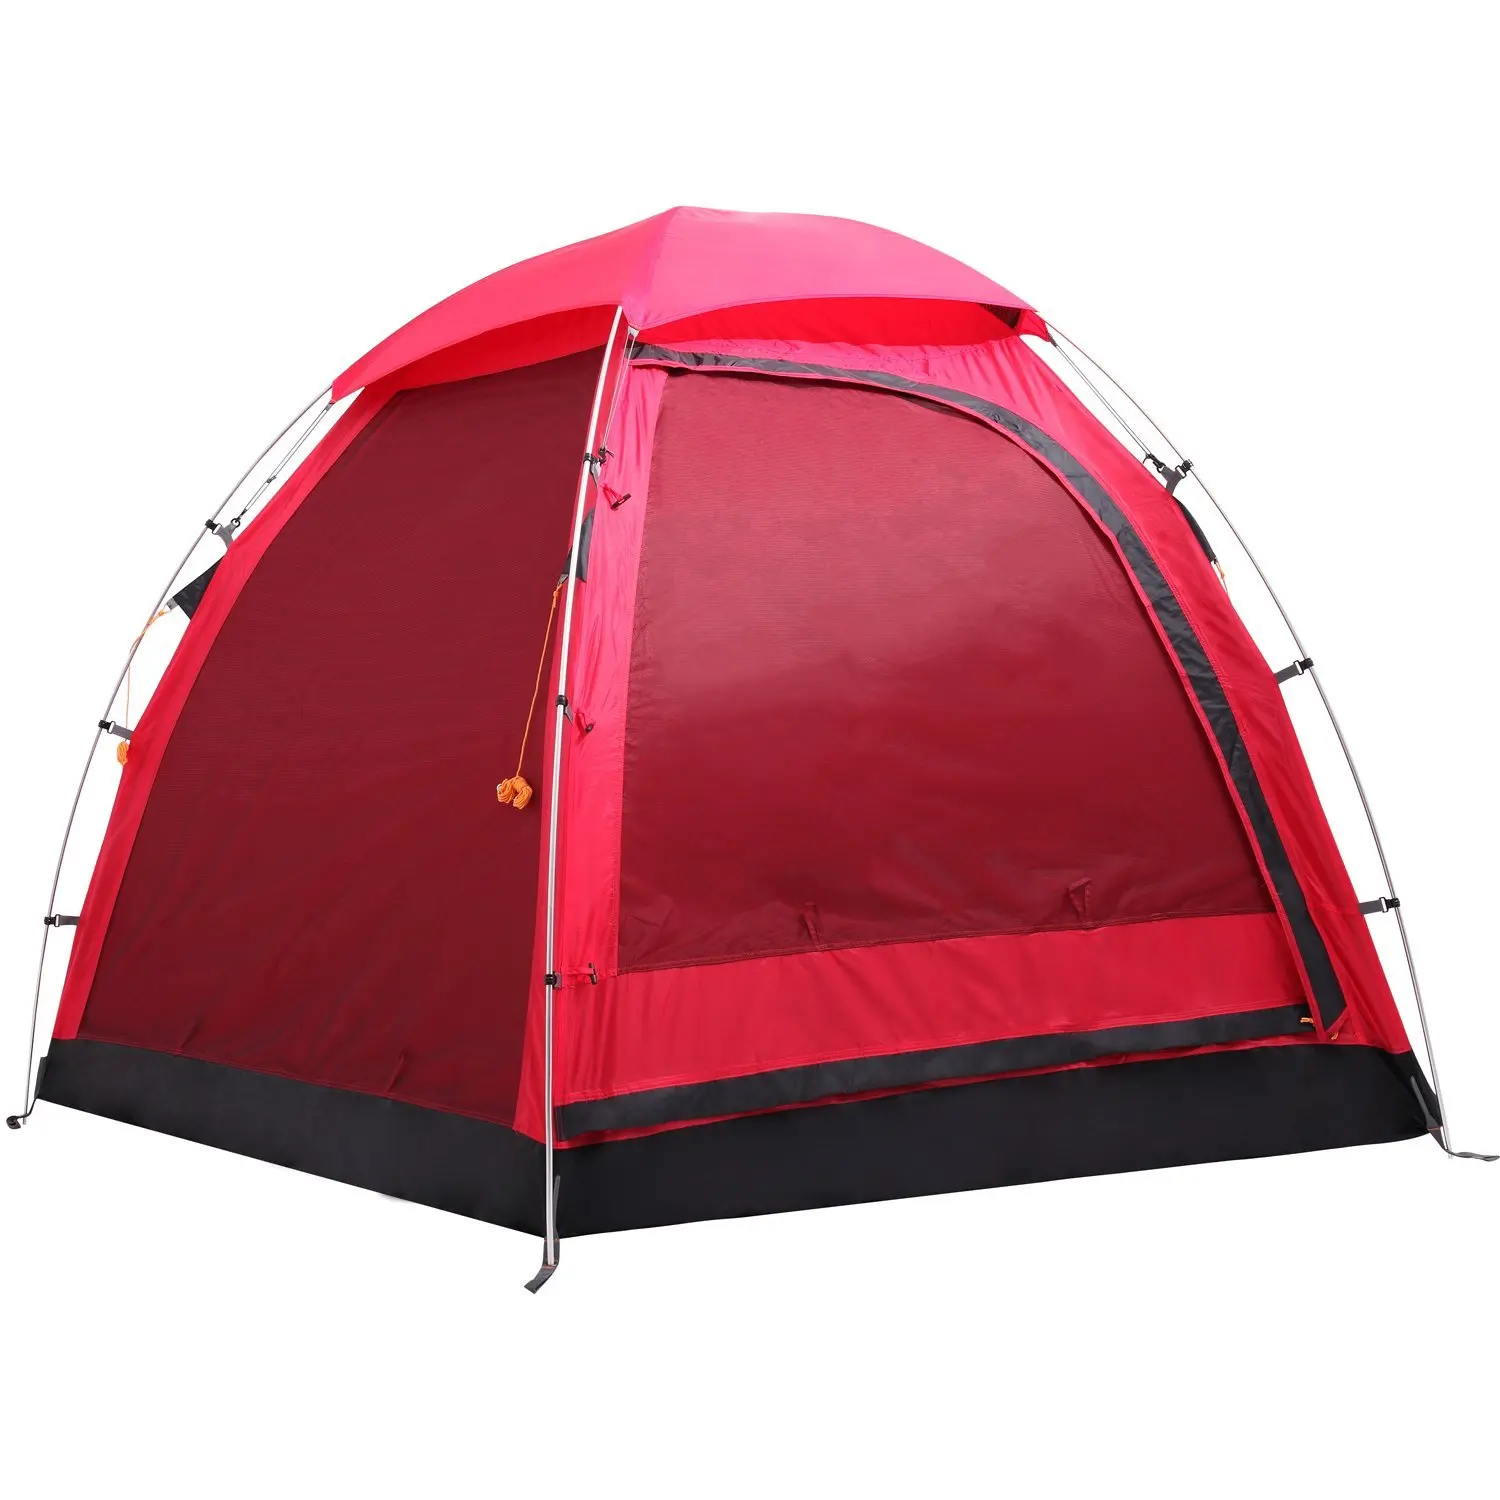 Buy Vinqliq Hexagonal Dome Family Camping Tent Screen Room